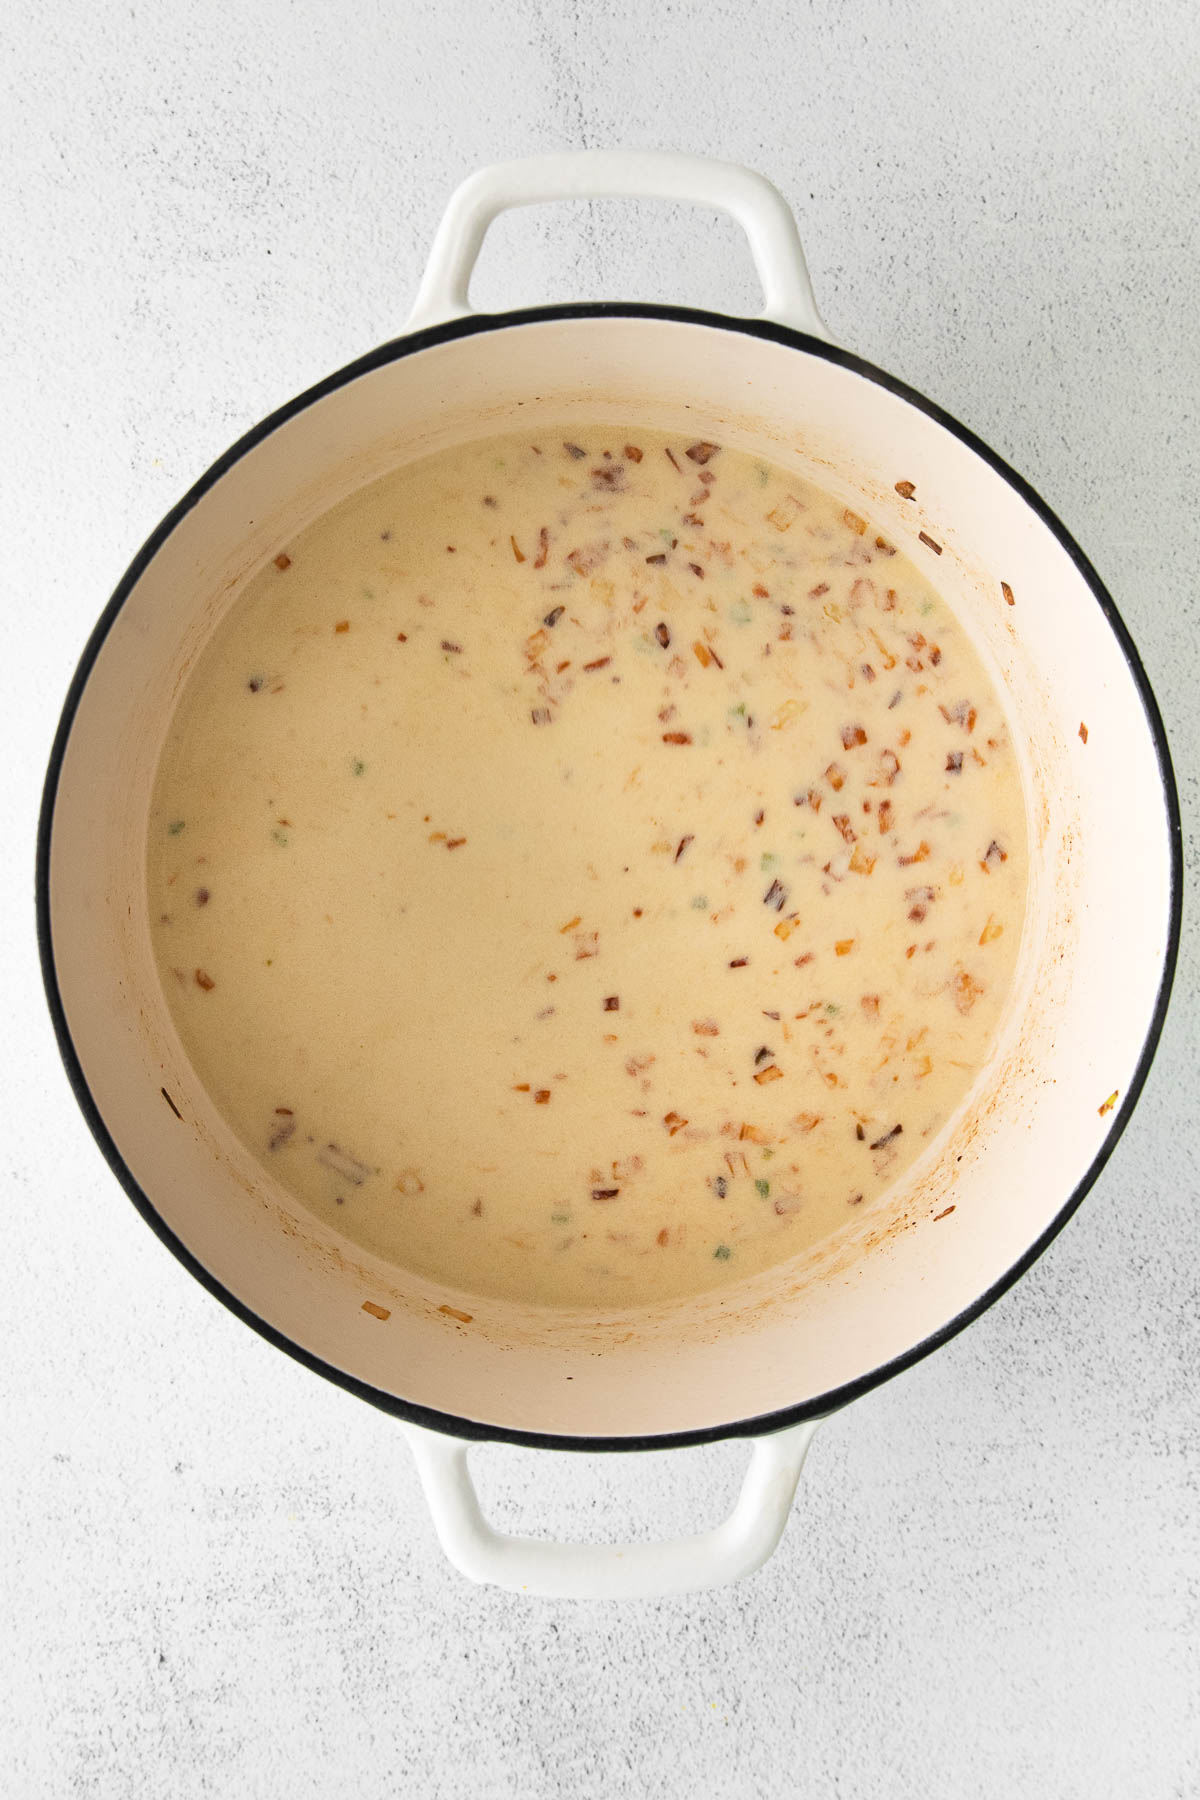 white soup pot with creamy soup